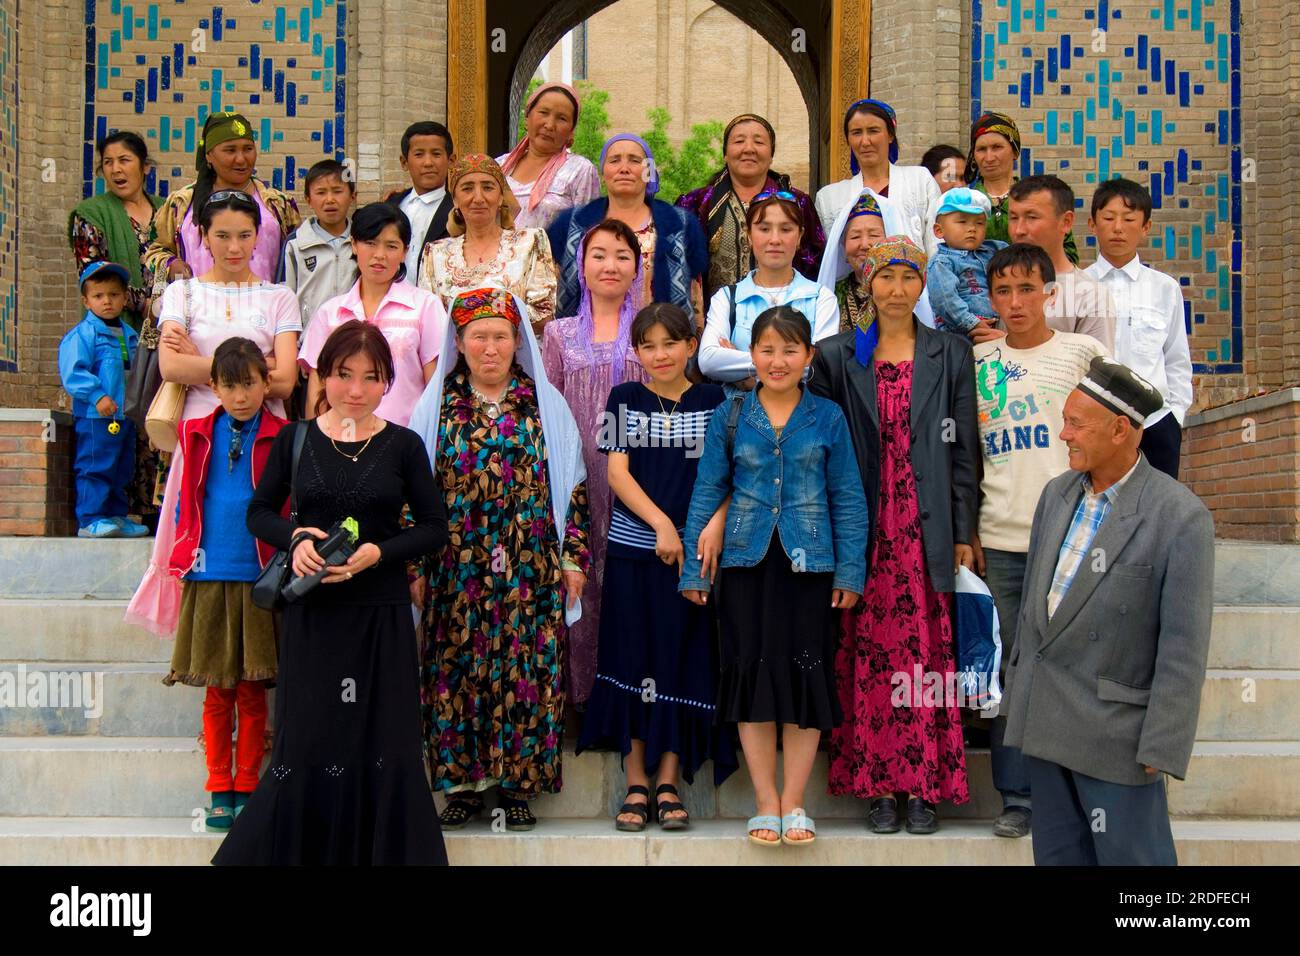 Tourist group, Shah-e-Sende necropolis, Samarkand, Uzbekistan, Shahi Sinda, necropolis Stock Photo